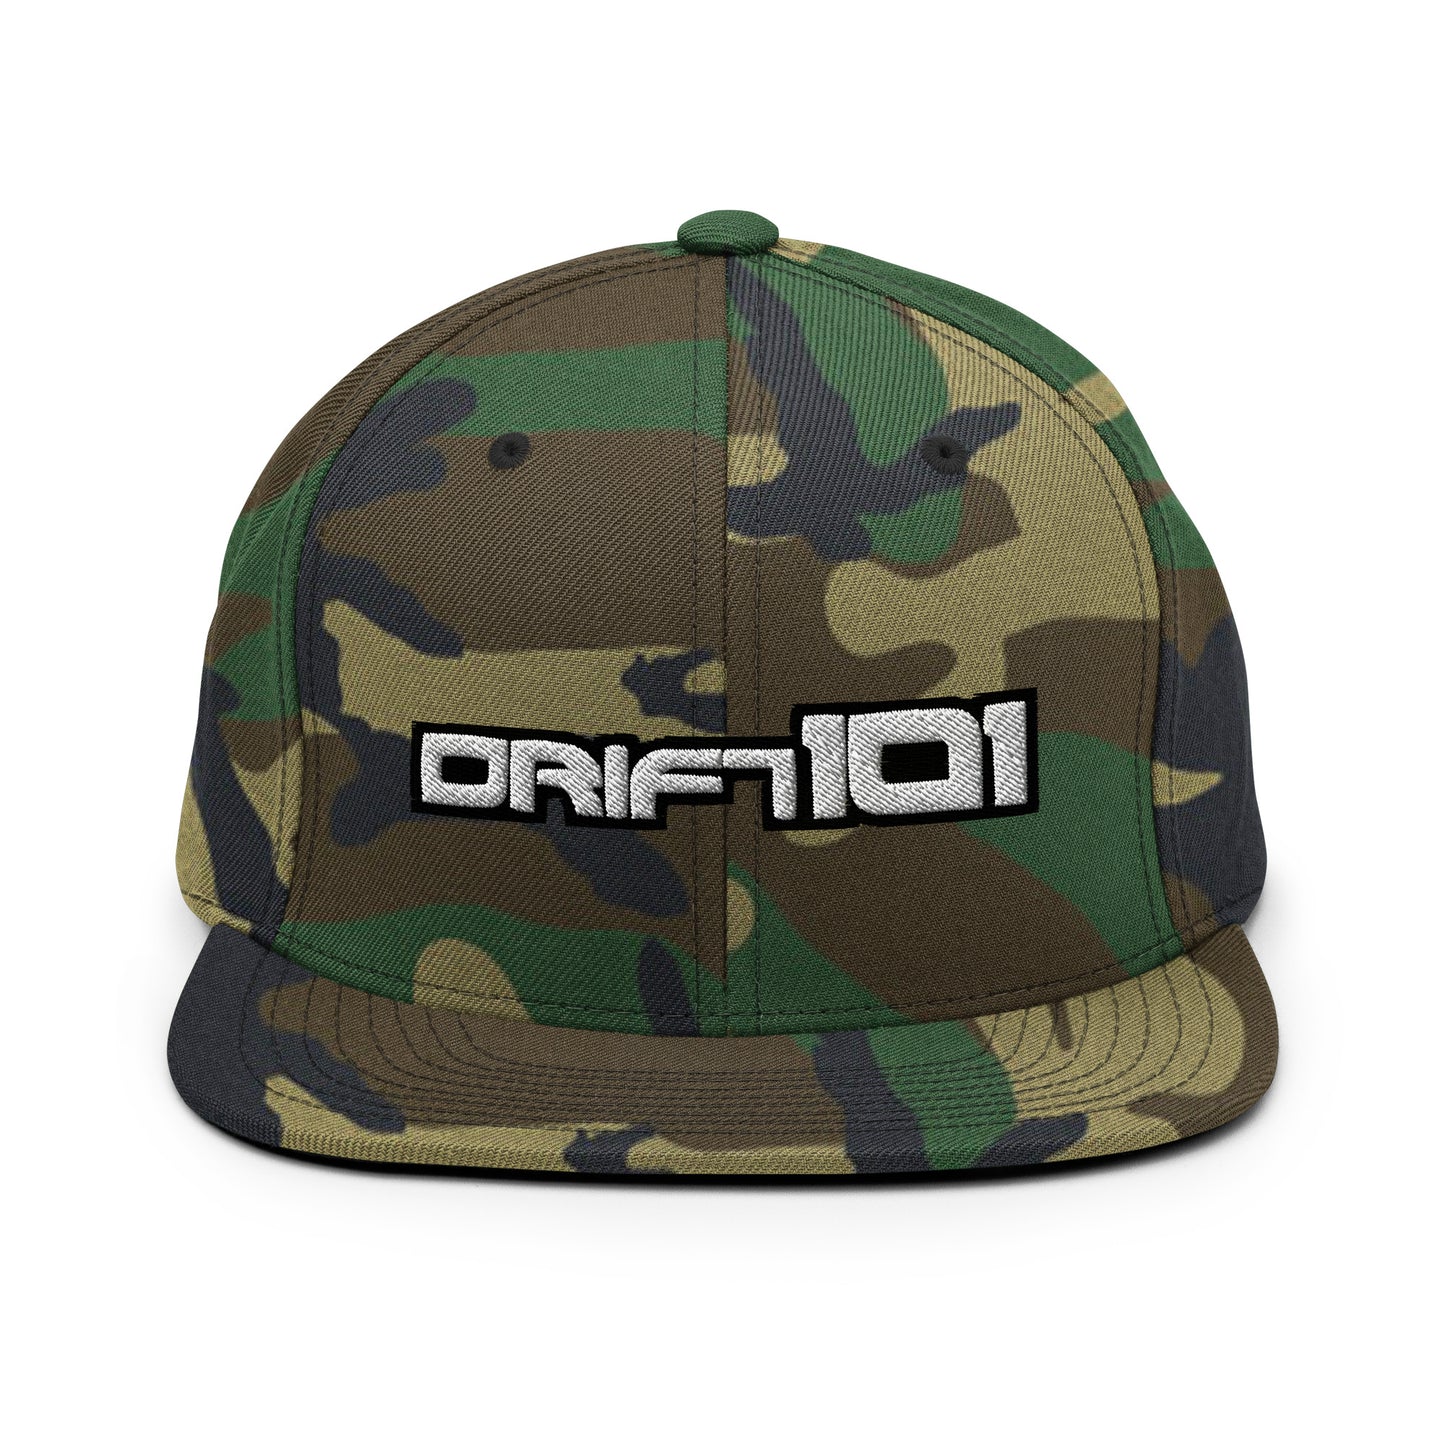 Drift 101 Snapback Hat